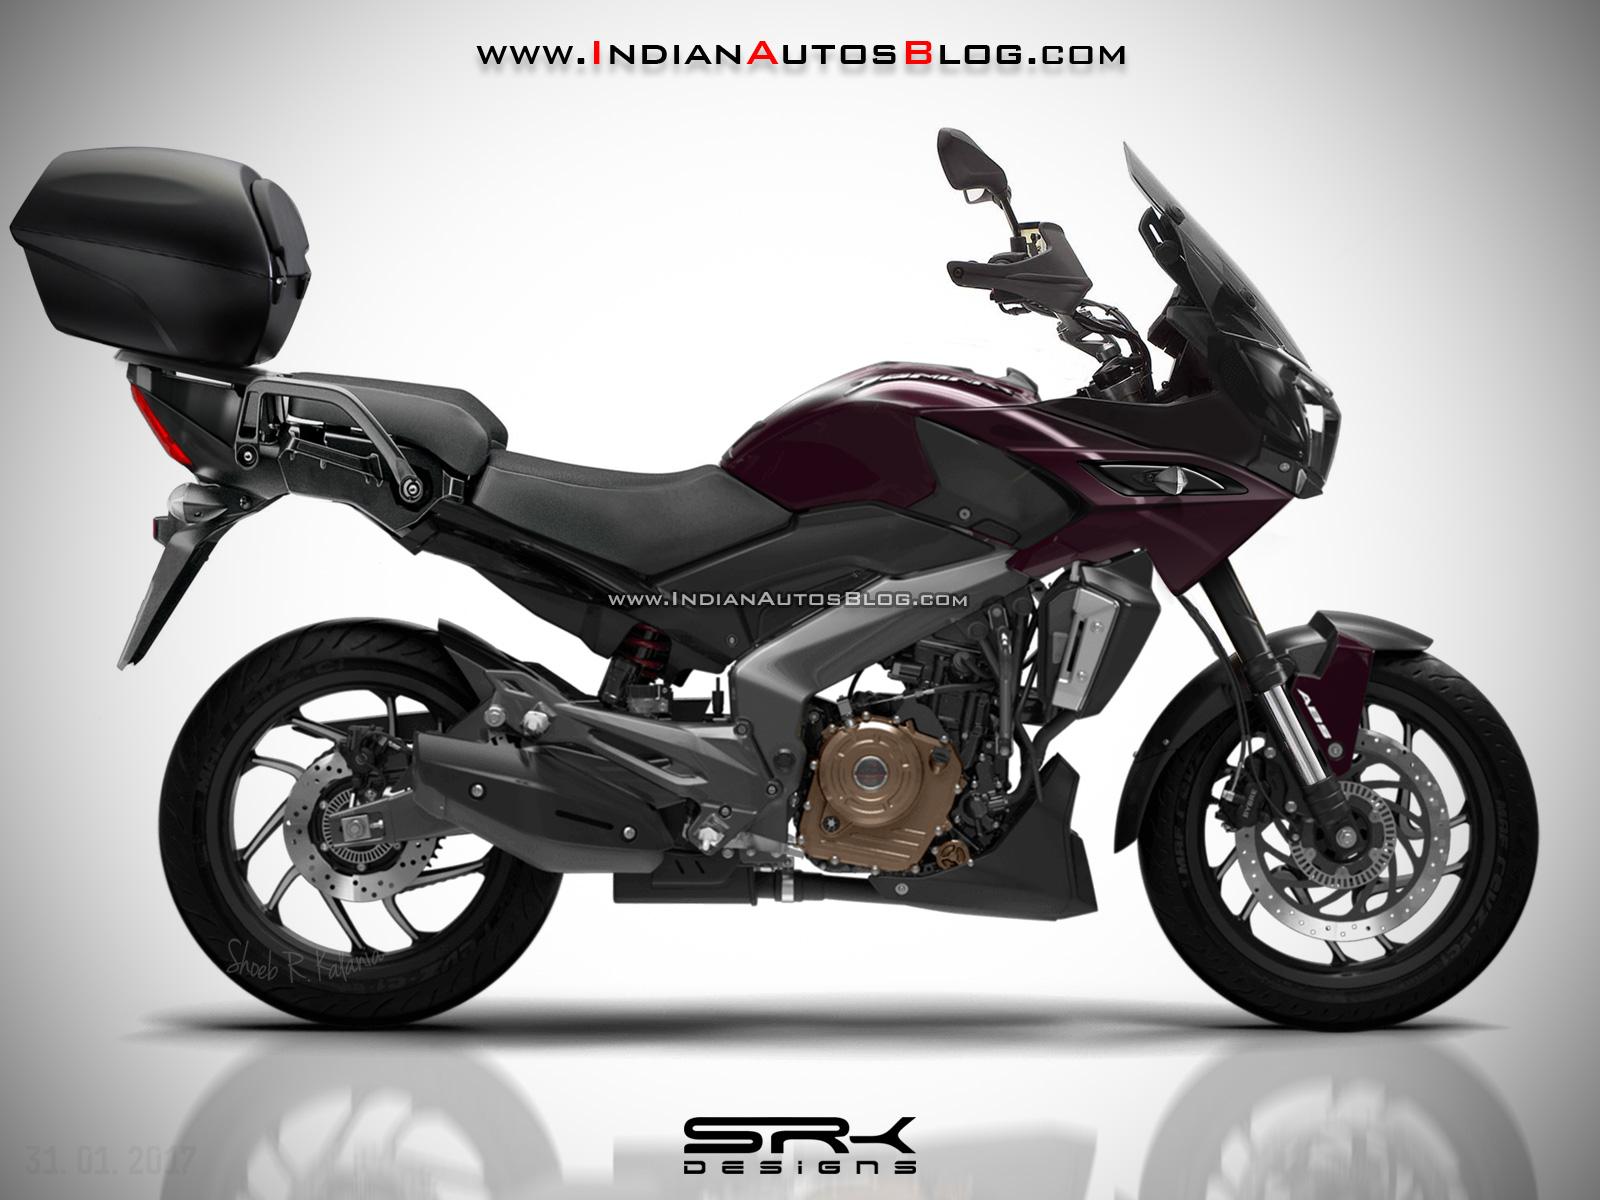 Bajaj to launch 250 cc adventure motorcycle next